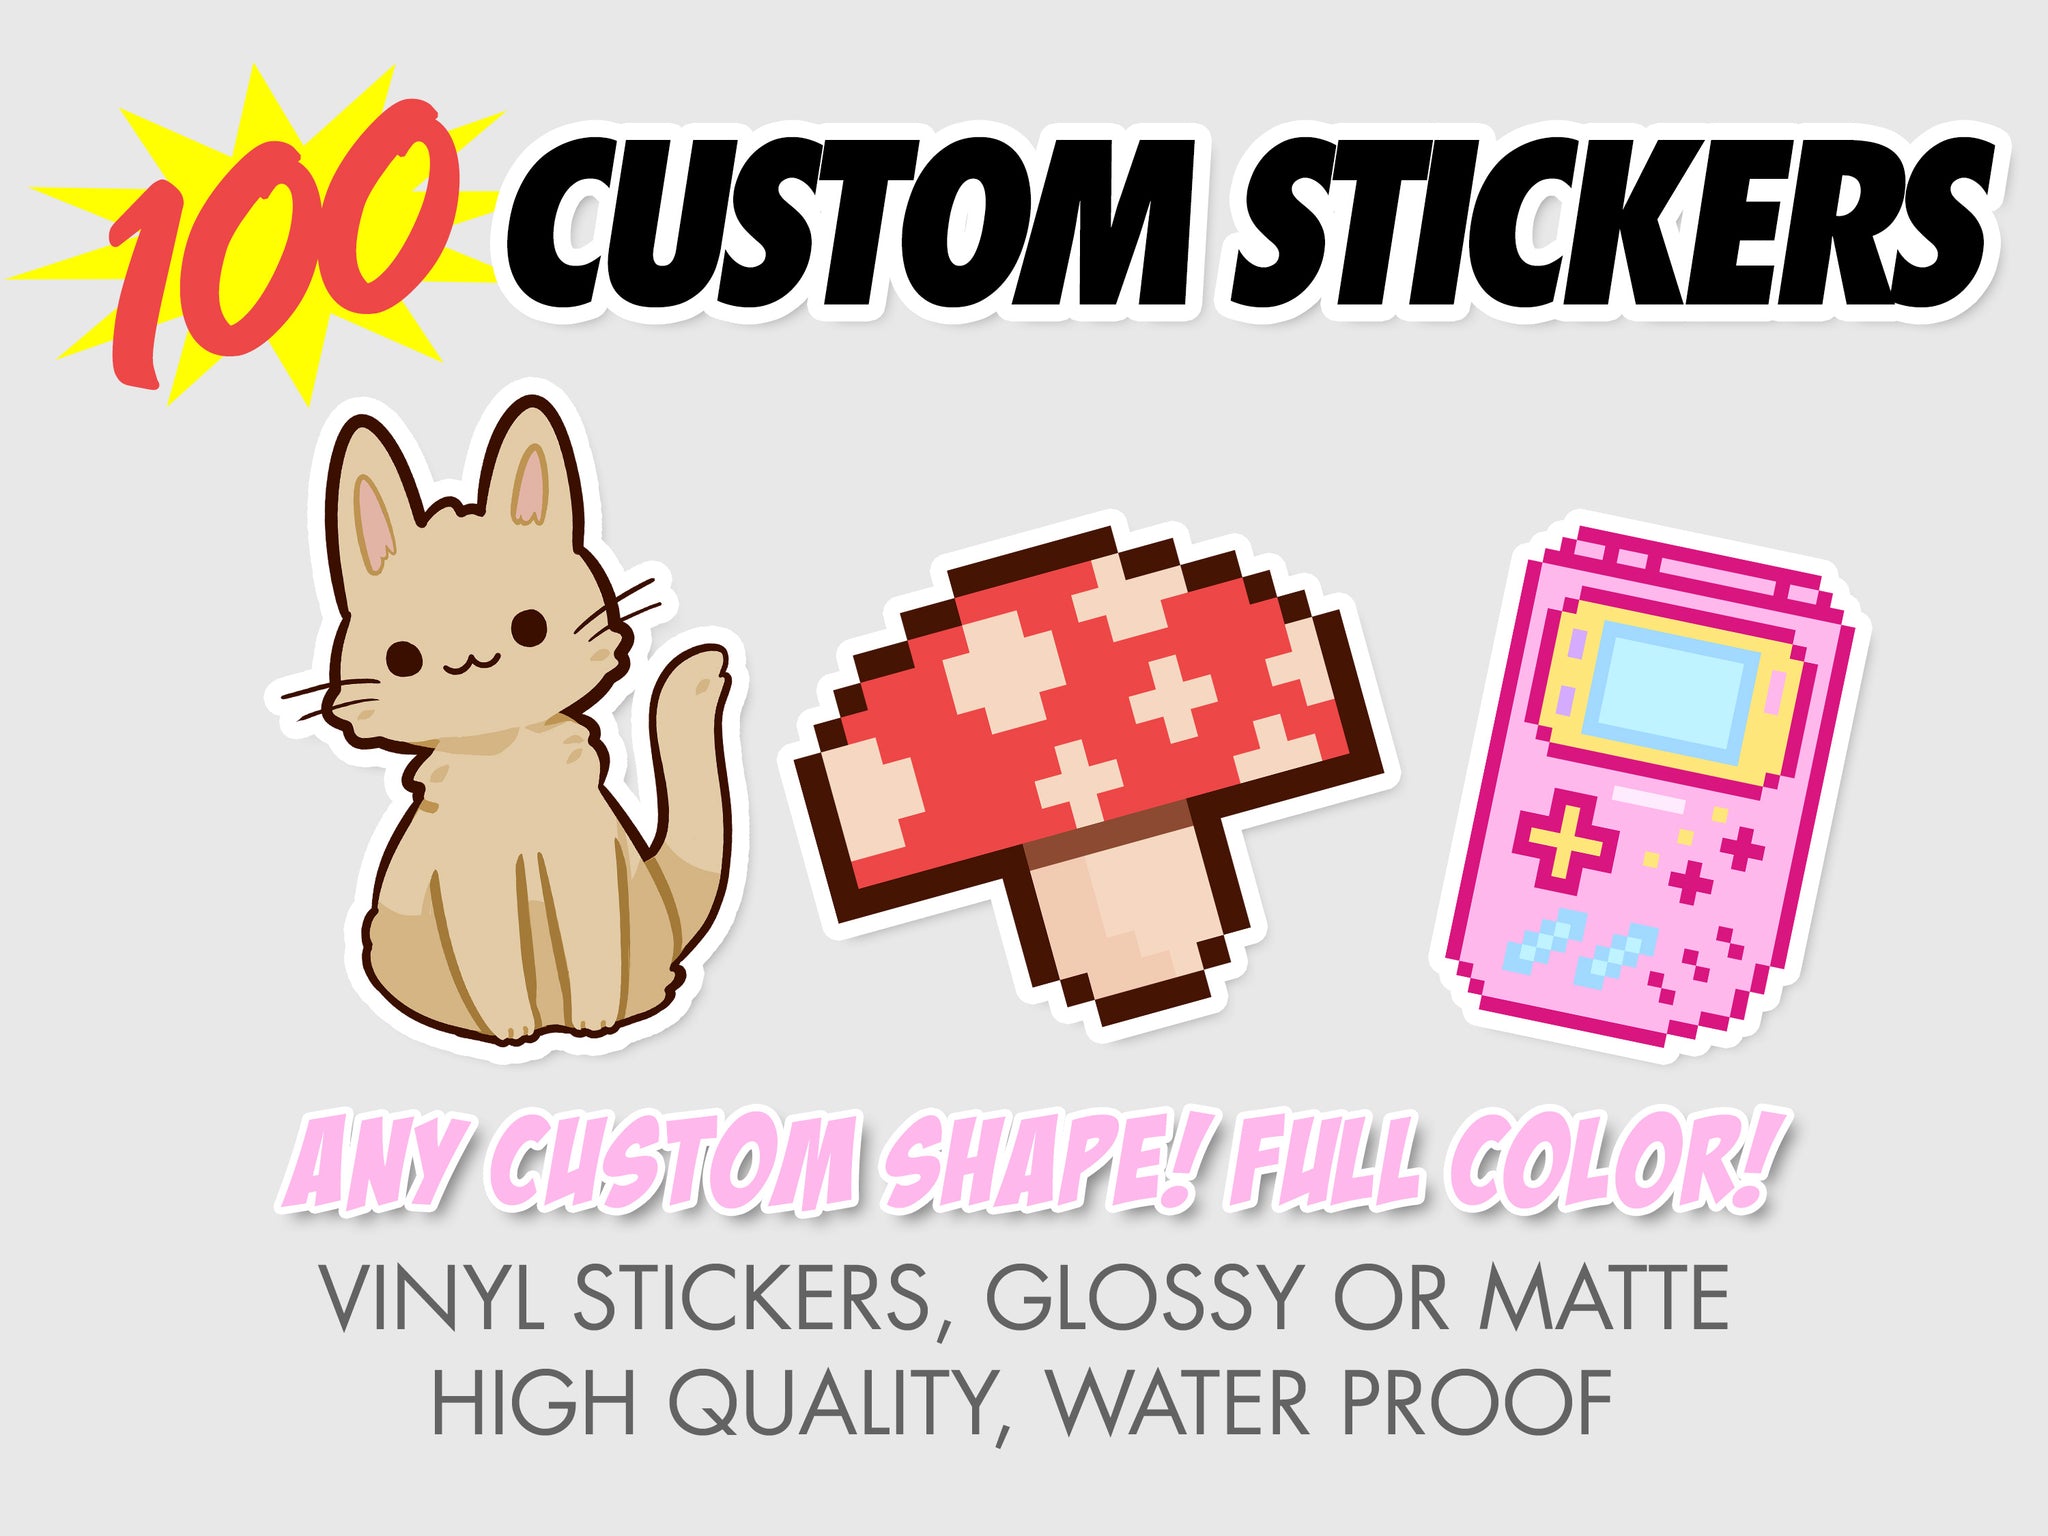 100 Custom Shaped Printed Stickers - VINYL HOUZE